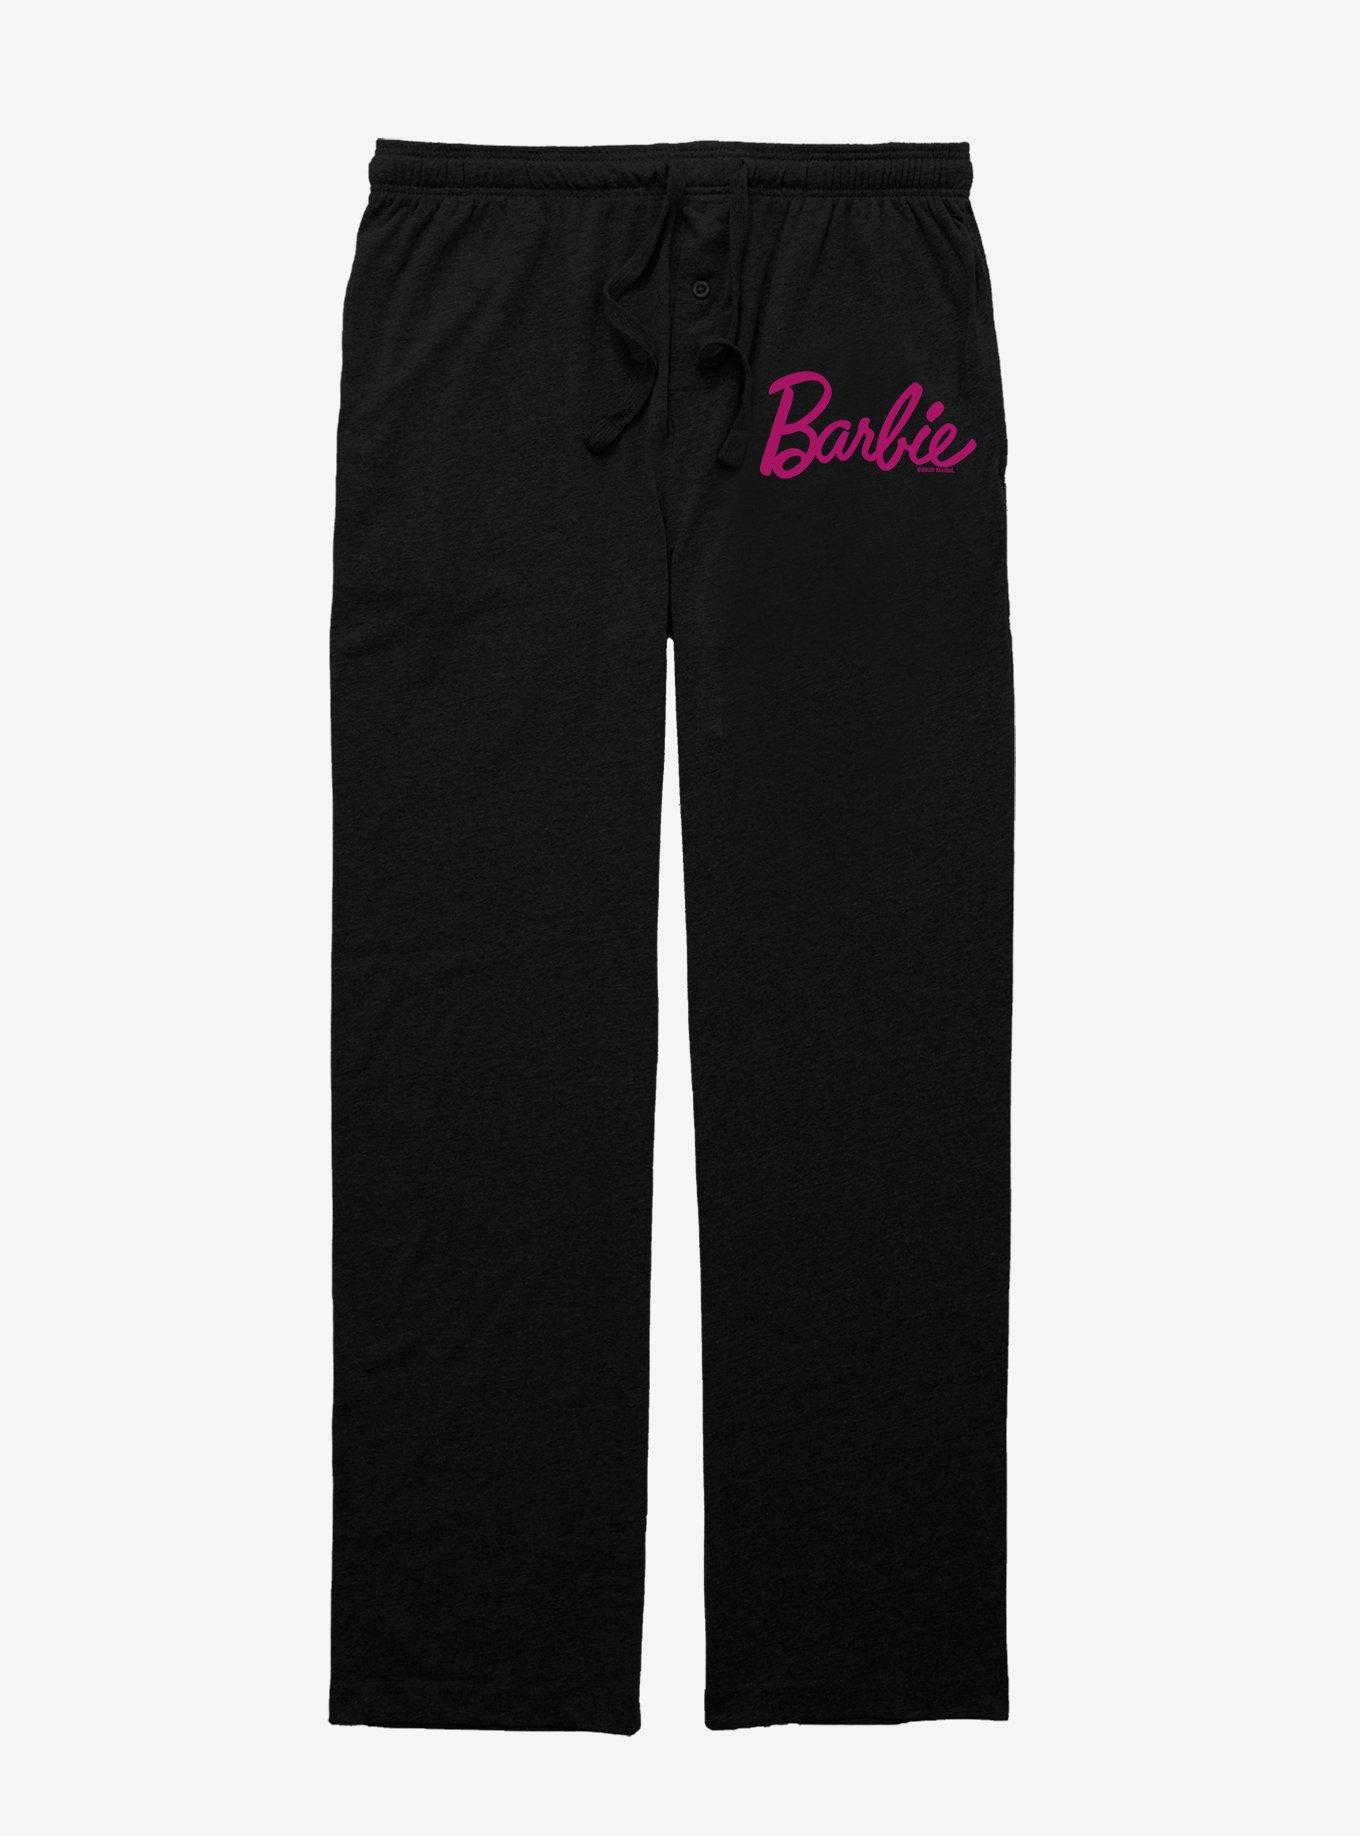 Barbie Stencil Pajama Pants, BLACK, hi-res